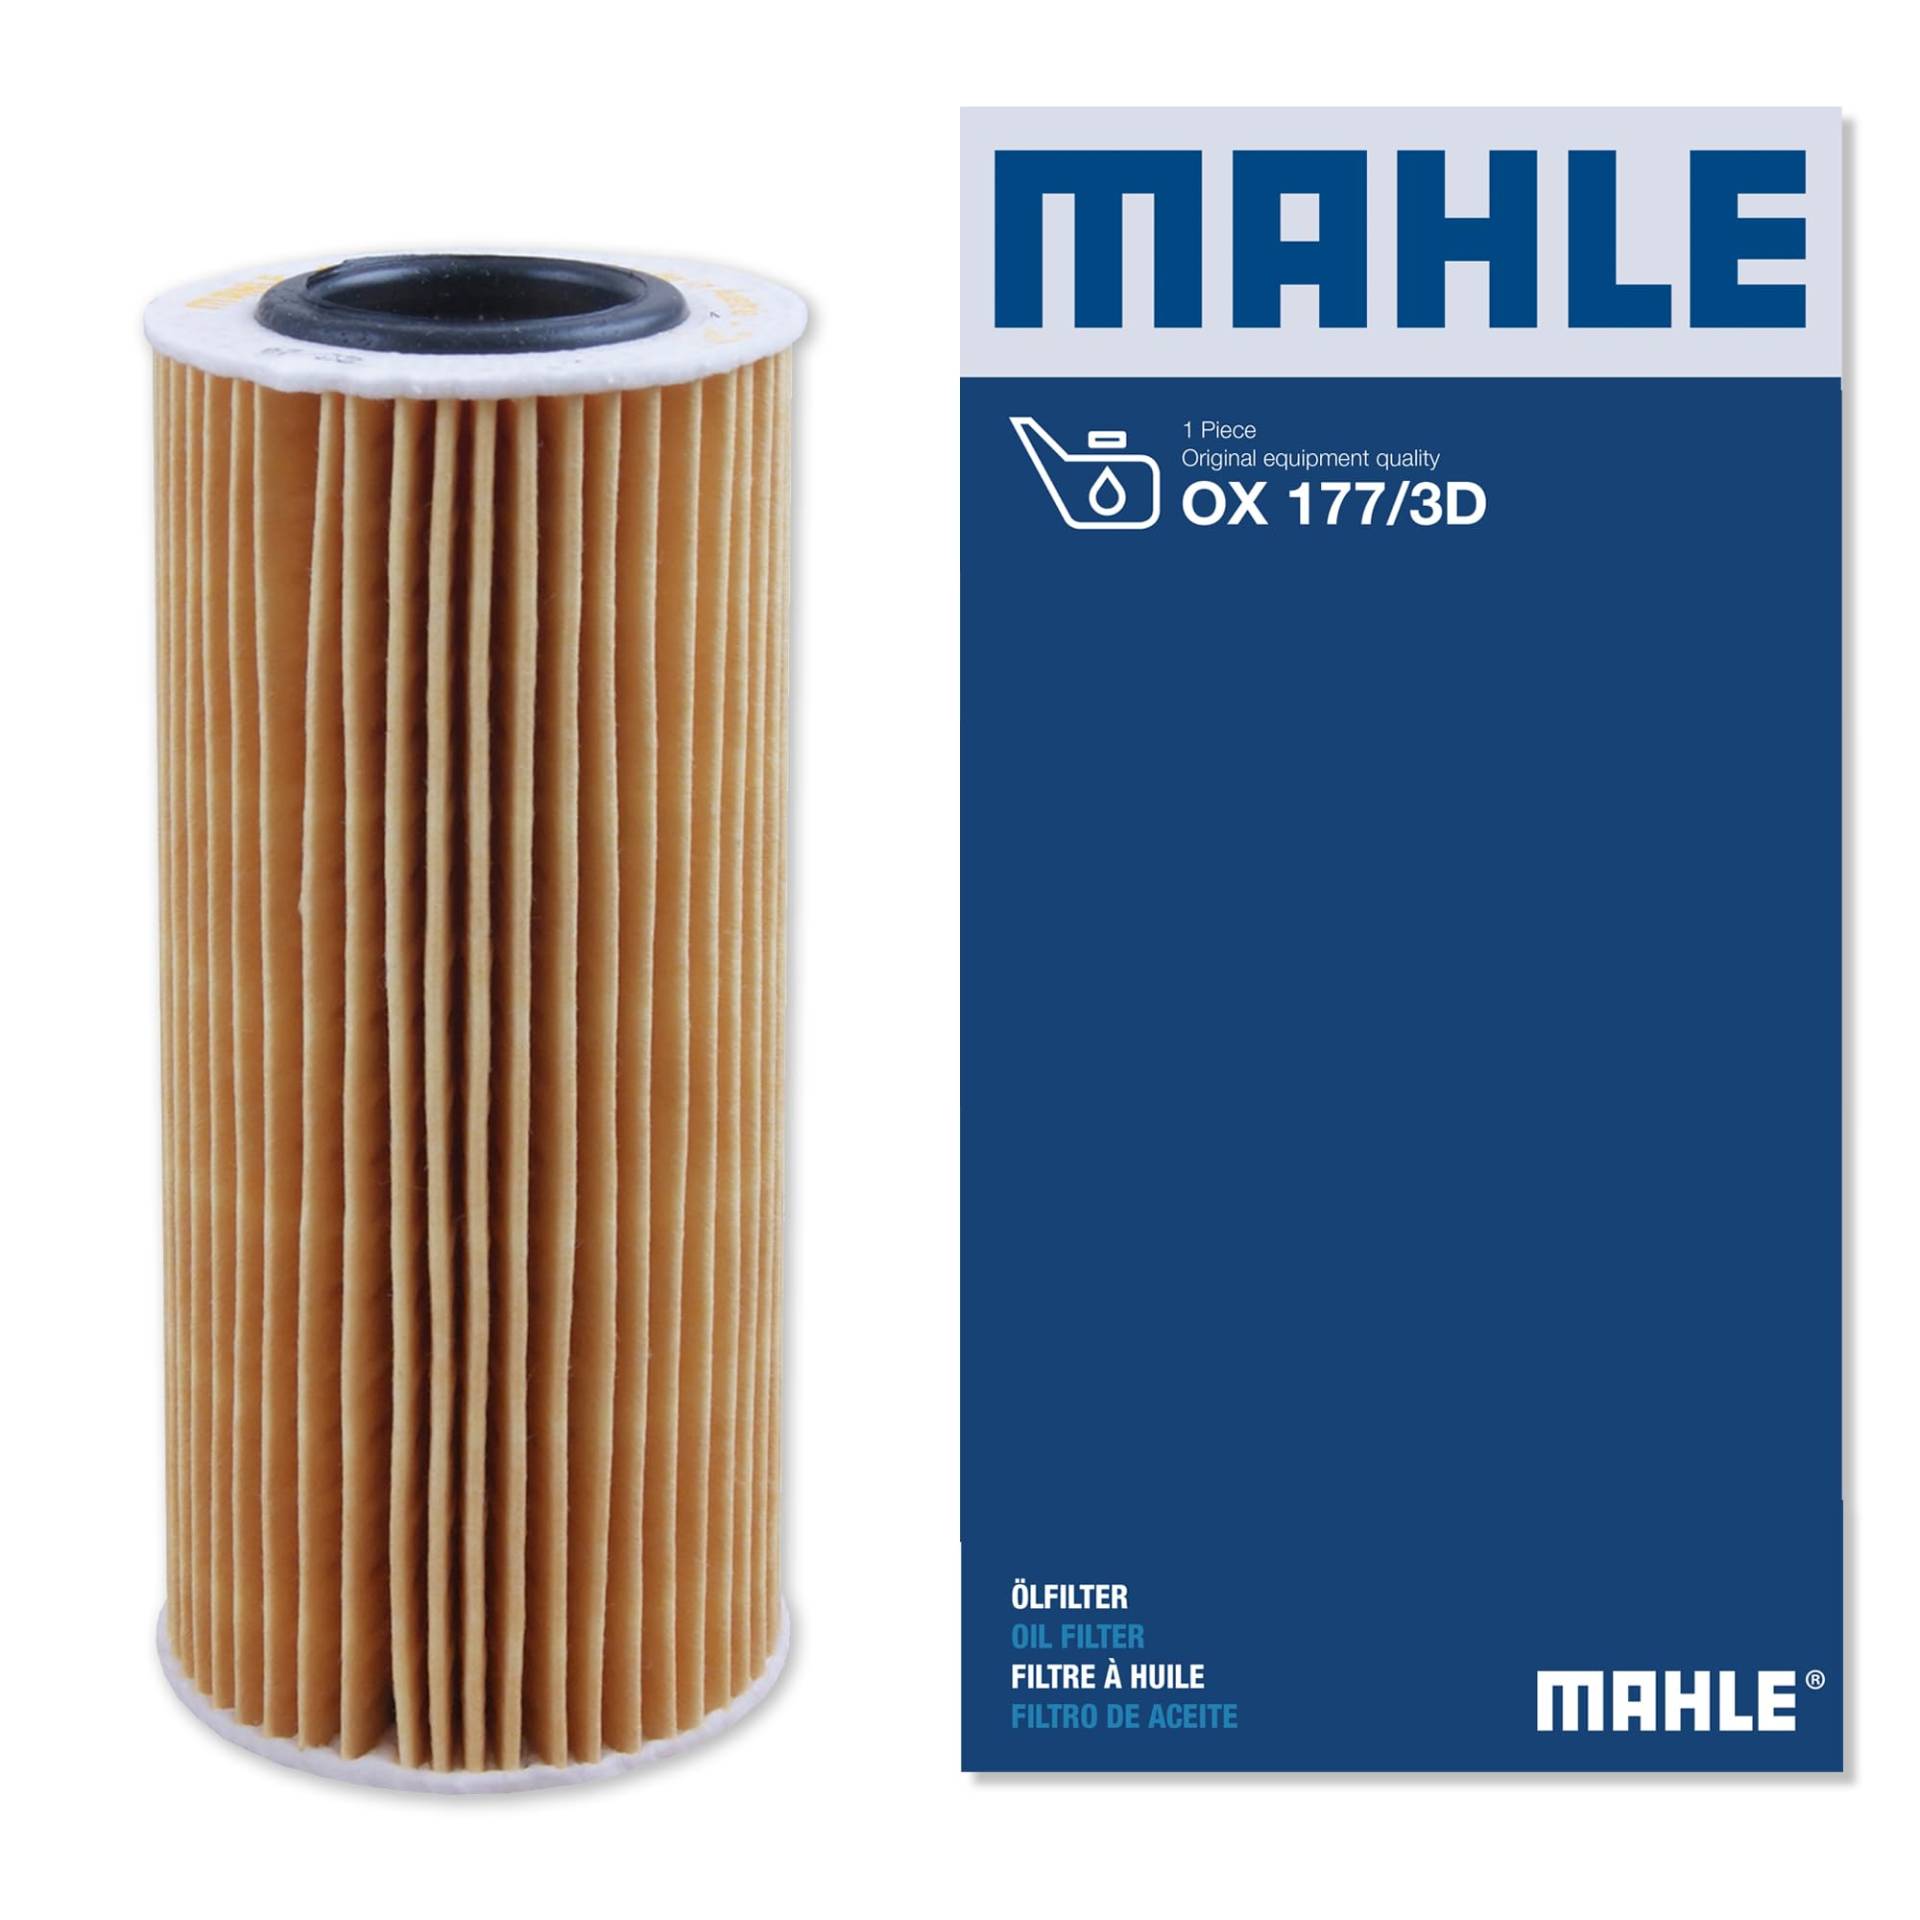 MAHLE OX 177/3D Ölfilter von MAHLE